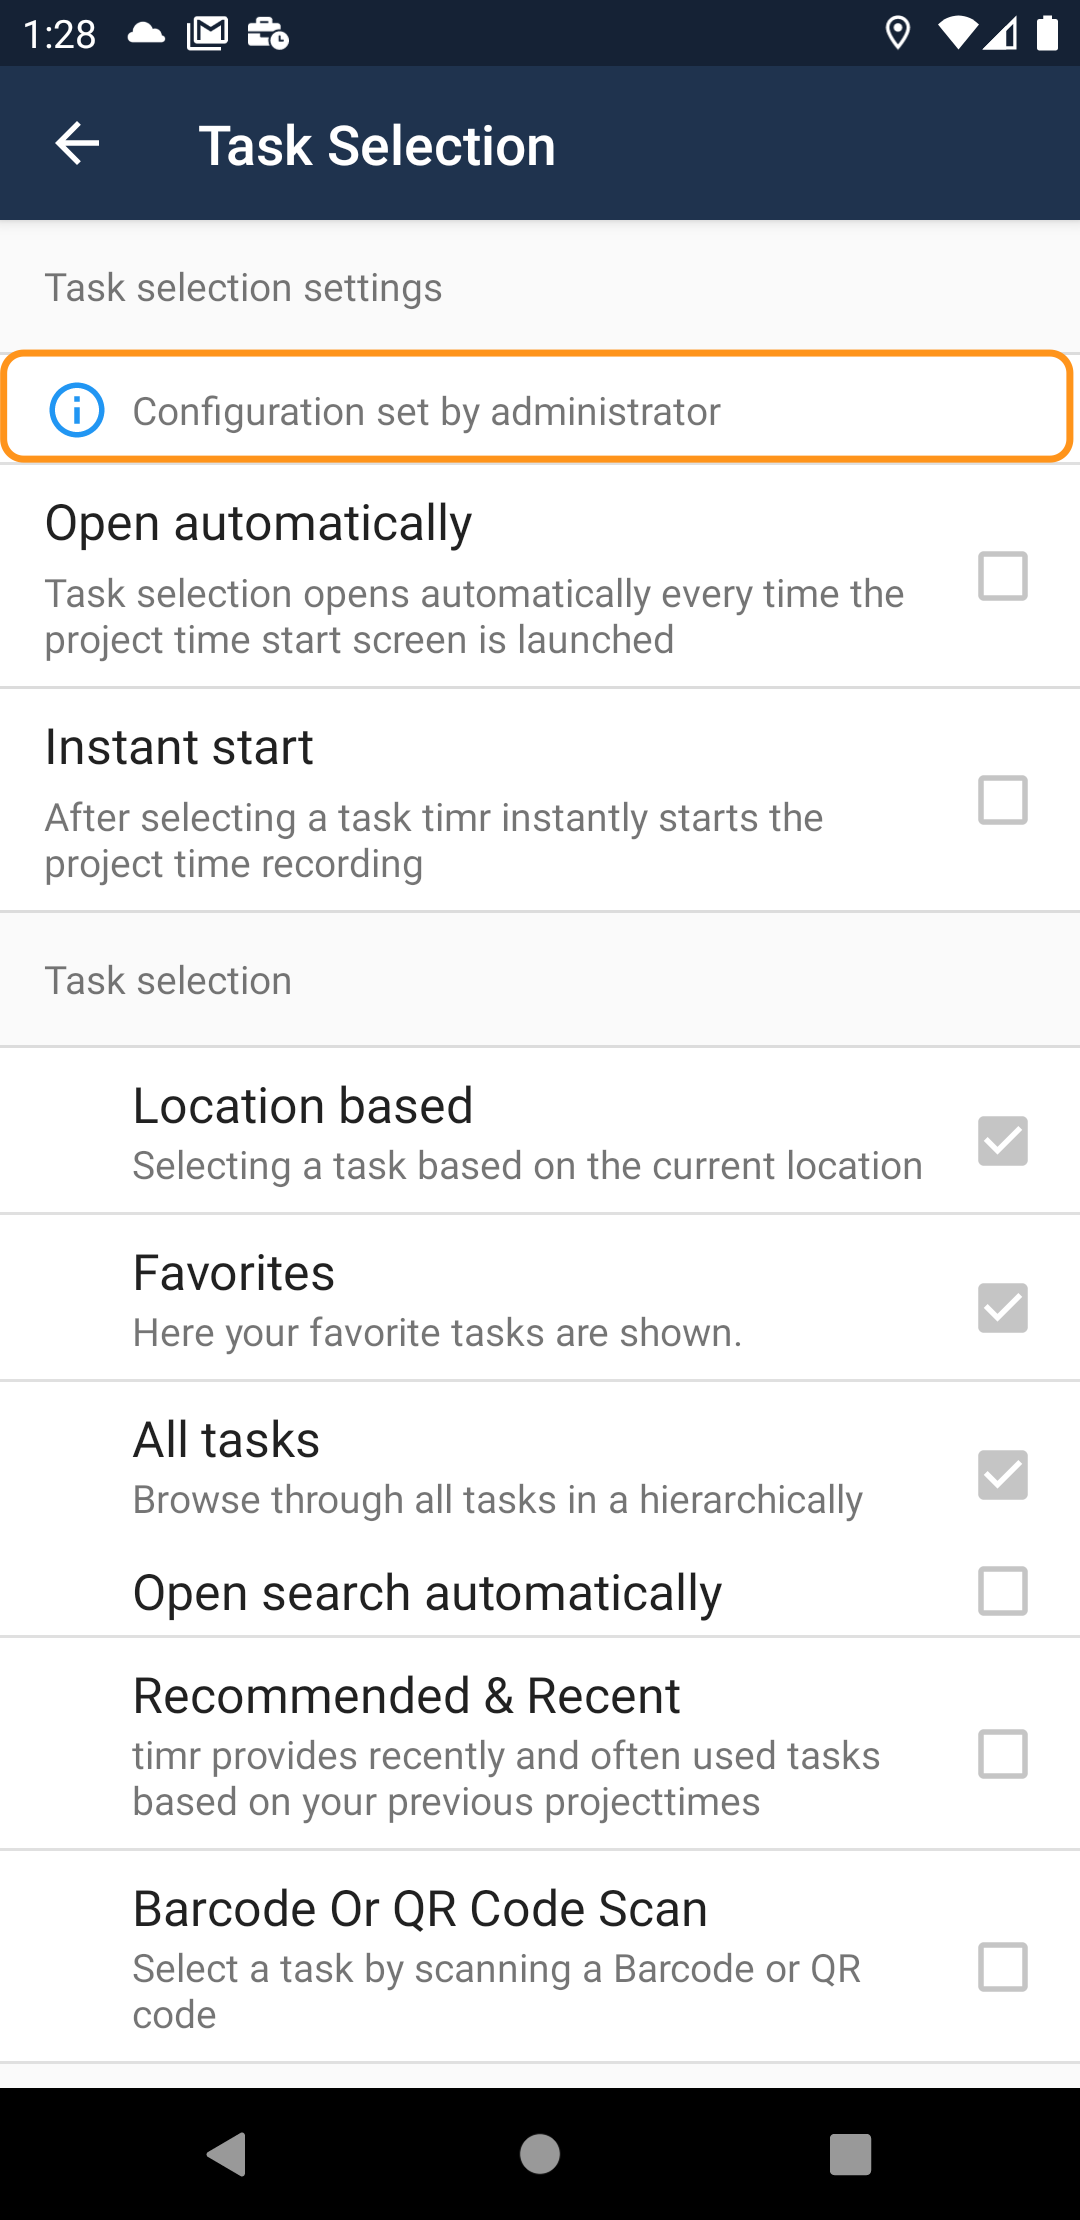 TaskSelection_Android_Admin_EN.png